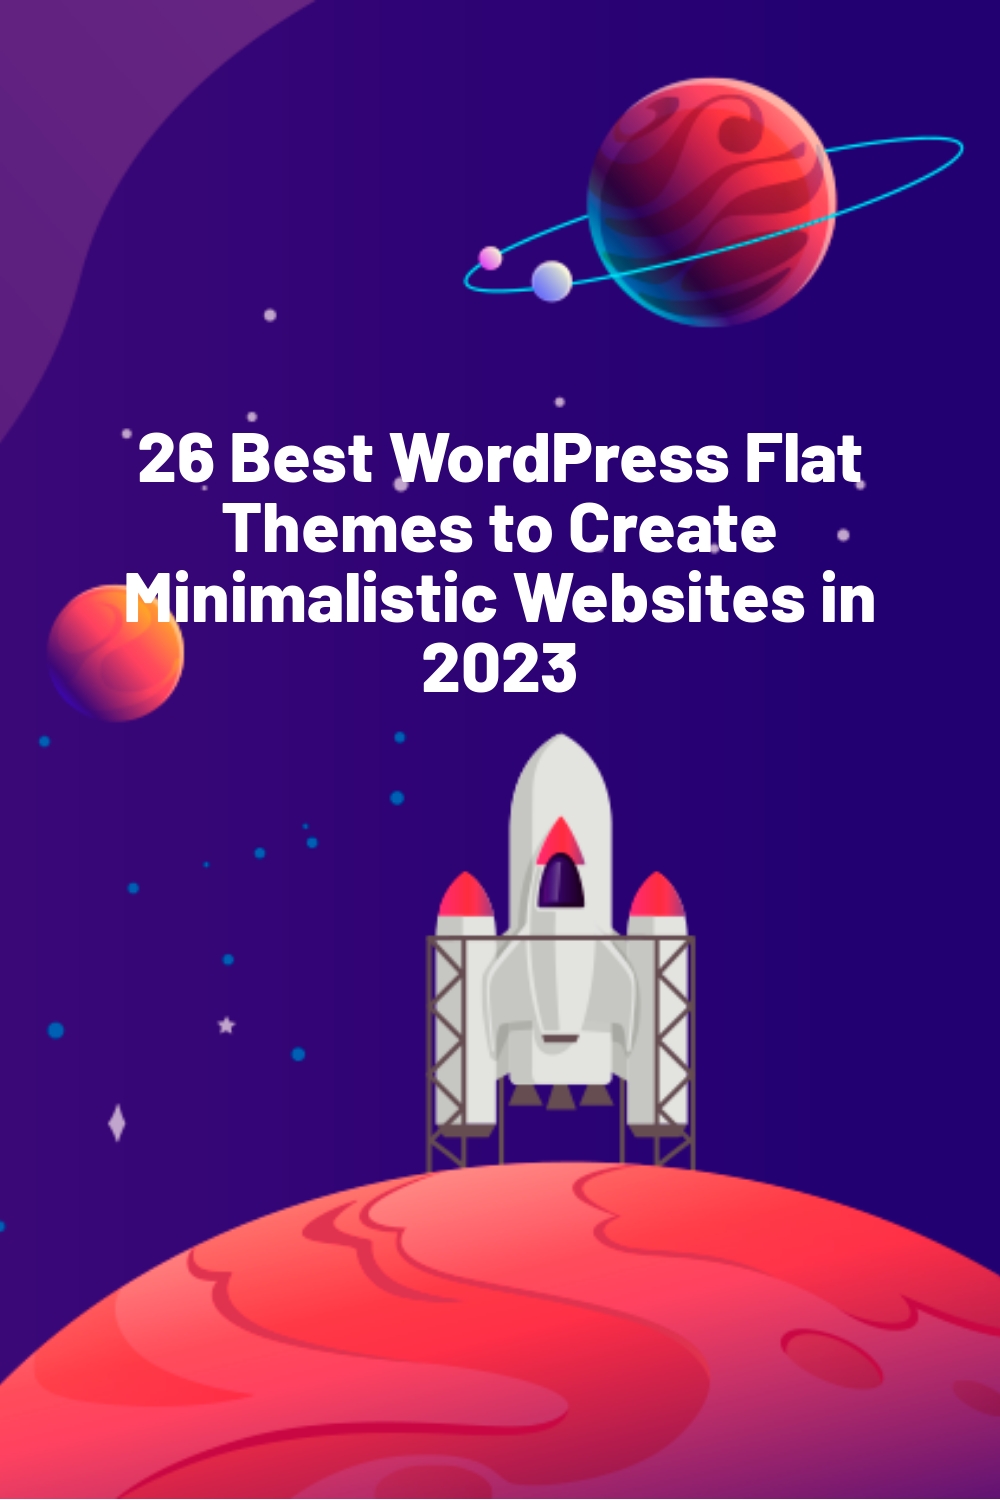 26 Best WordPress Flat Themes to Create Minimalistic Websites in 2023